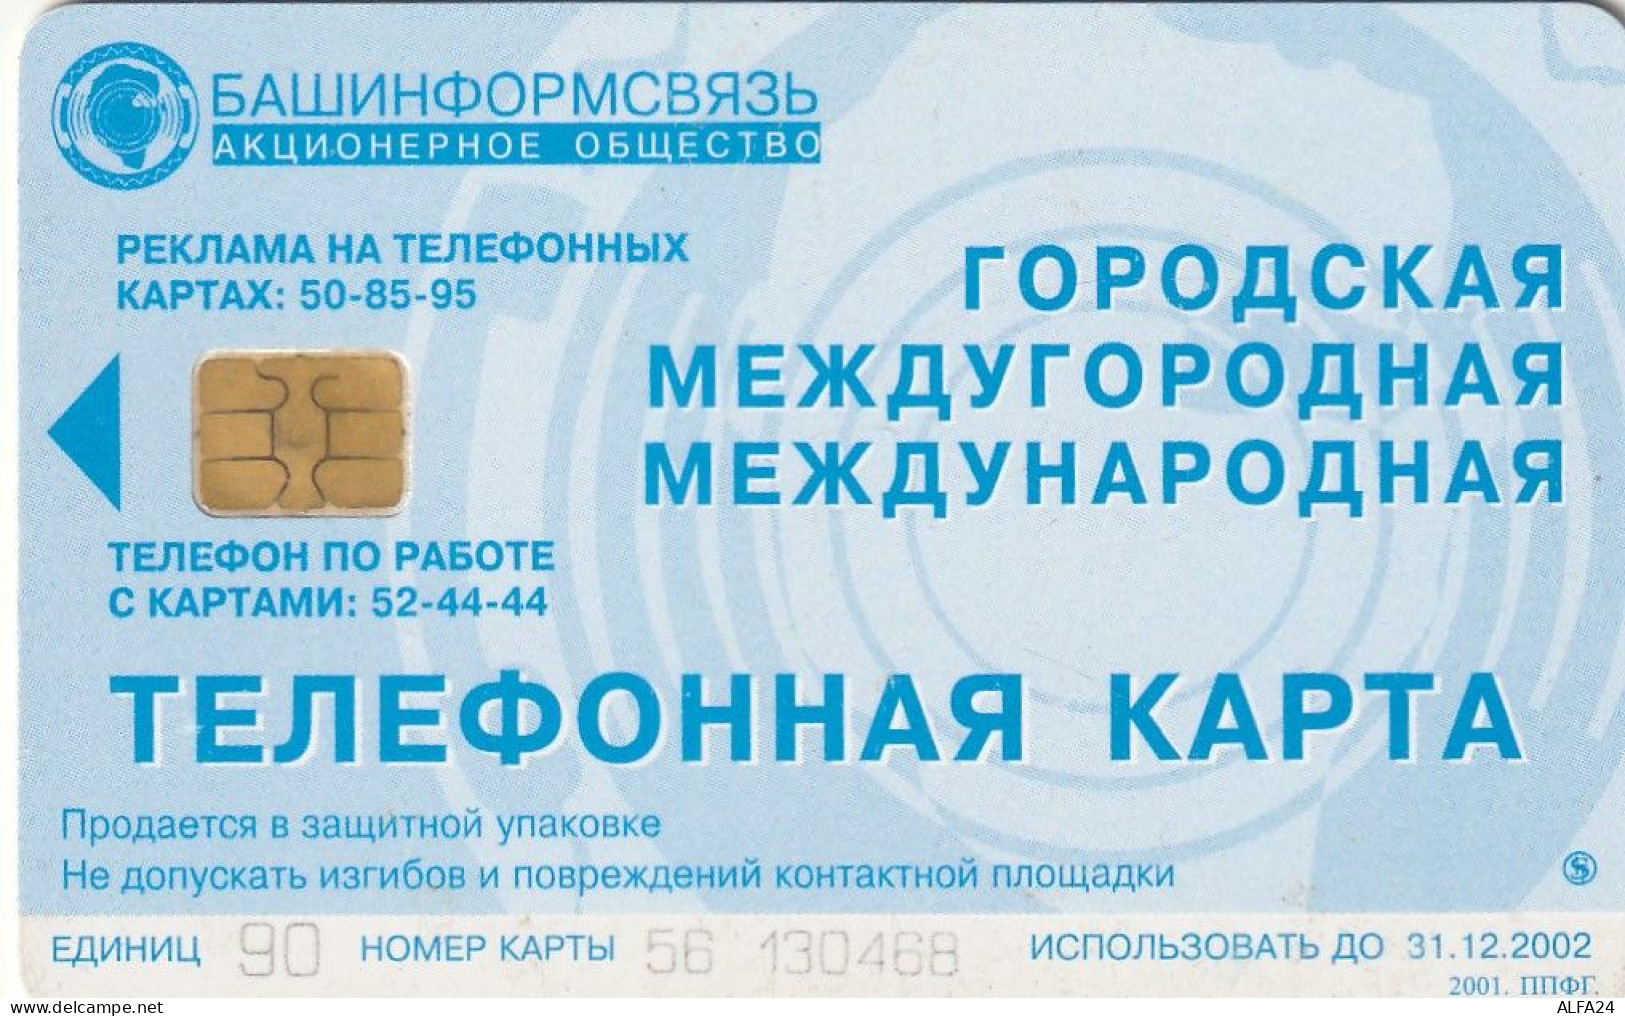 PHONE CARD RUSSIA Bashinformsvyaz - Ufa (E9.2.6 - Russia